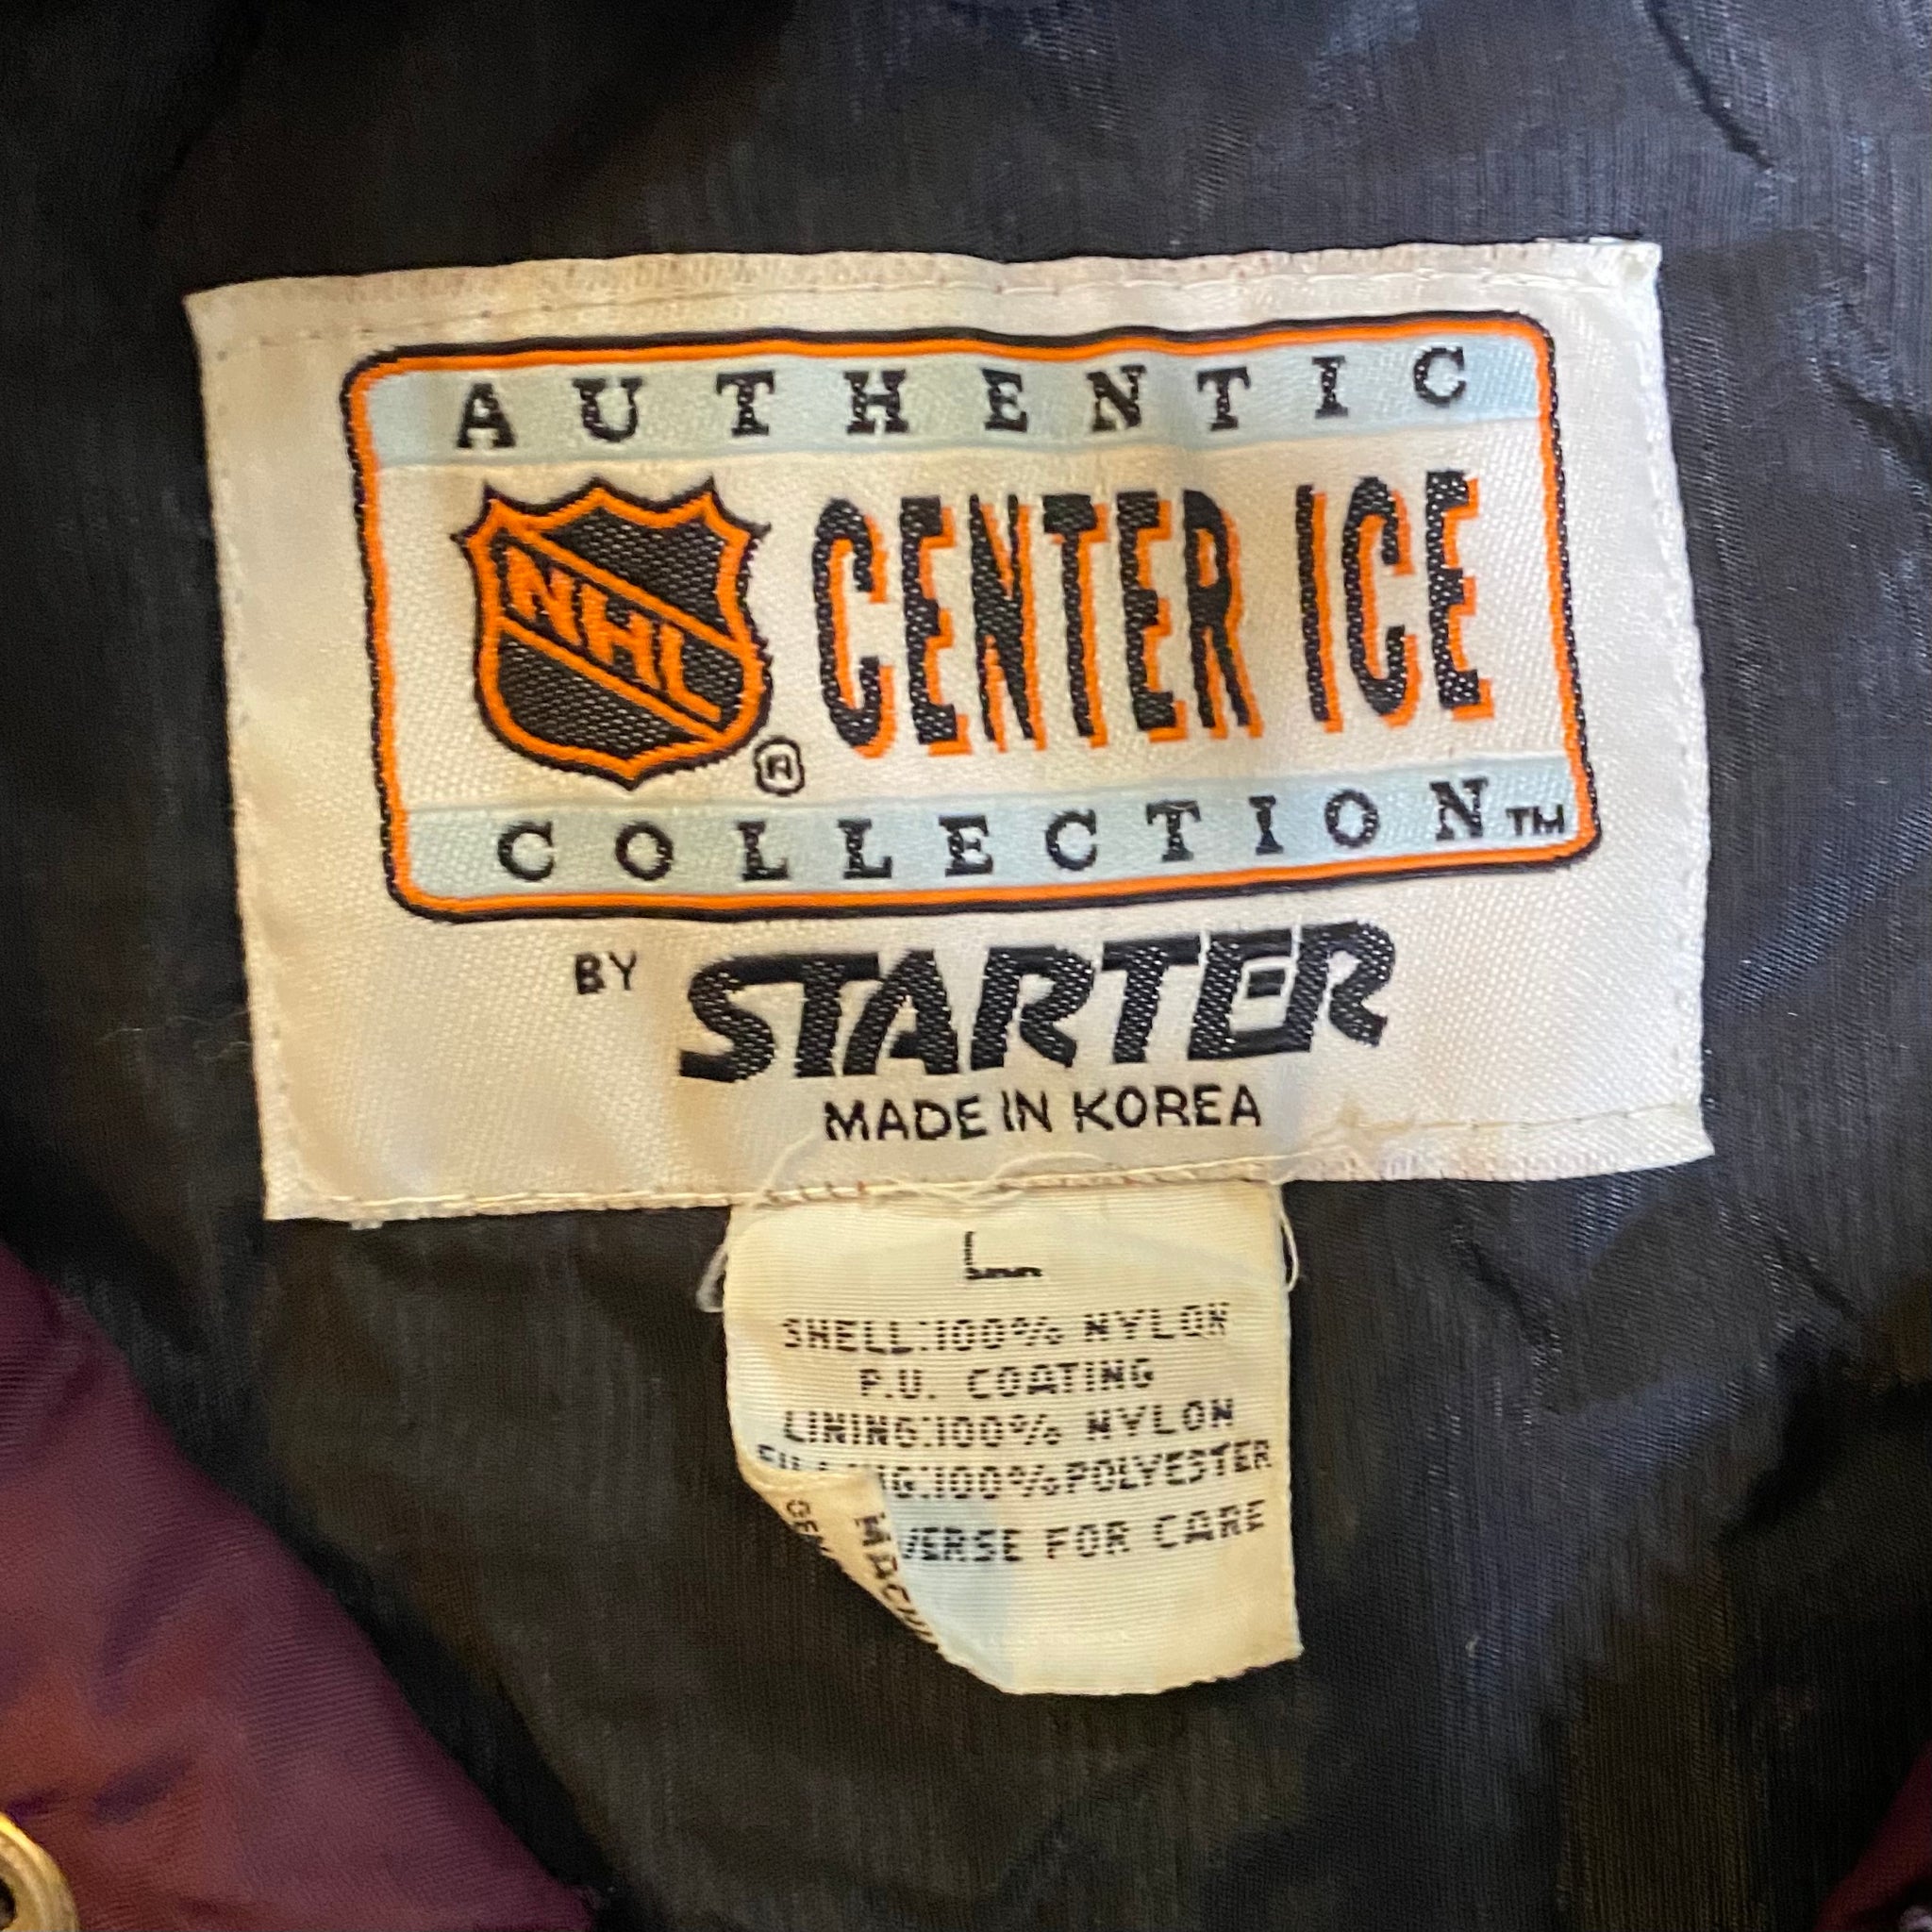 Vintage 90's NHL Anaheim Mighty Ducks Winter Coat Jacket - Size Large